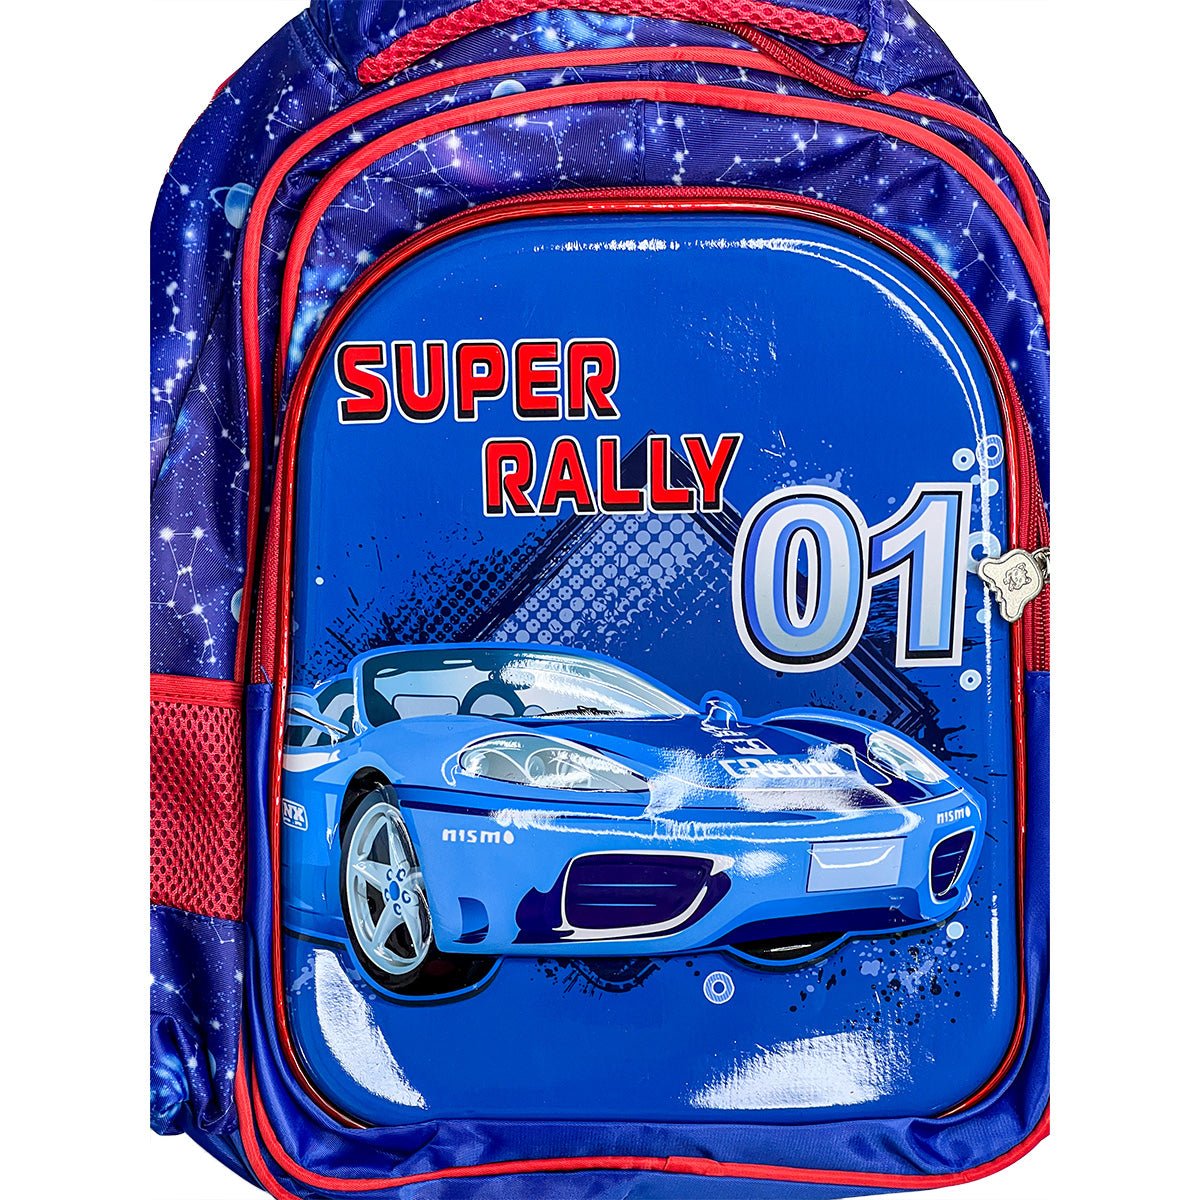 Prasdos 3D Children School Backpack - Rally Blue - Gear Up ZA